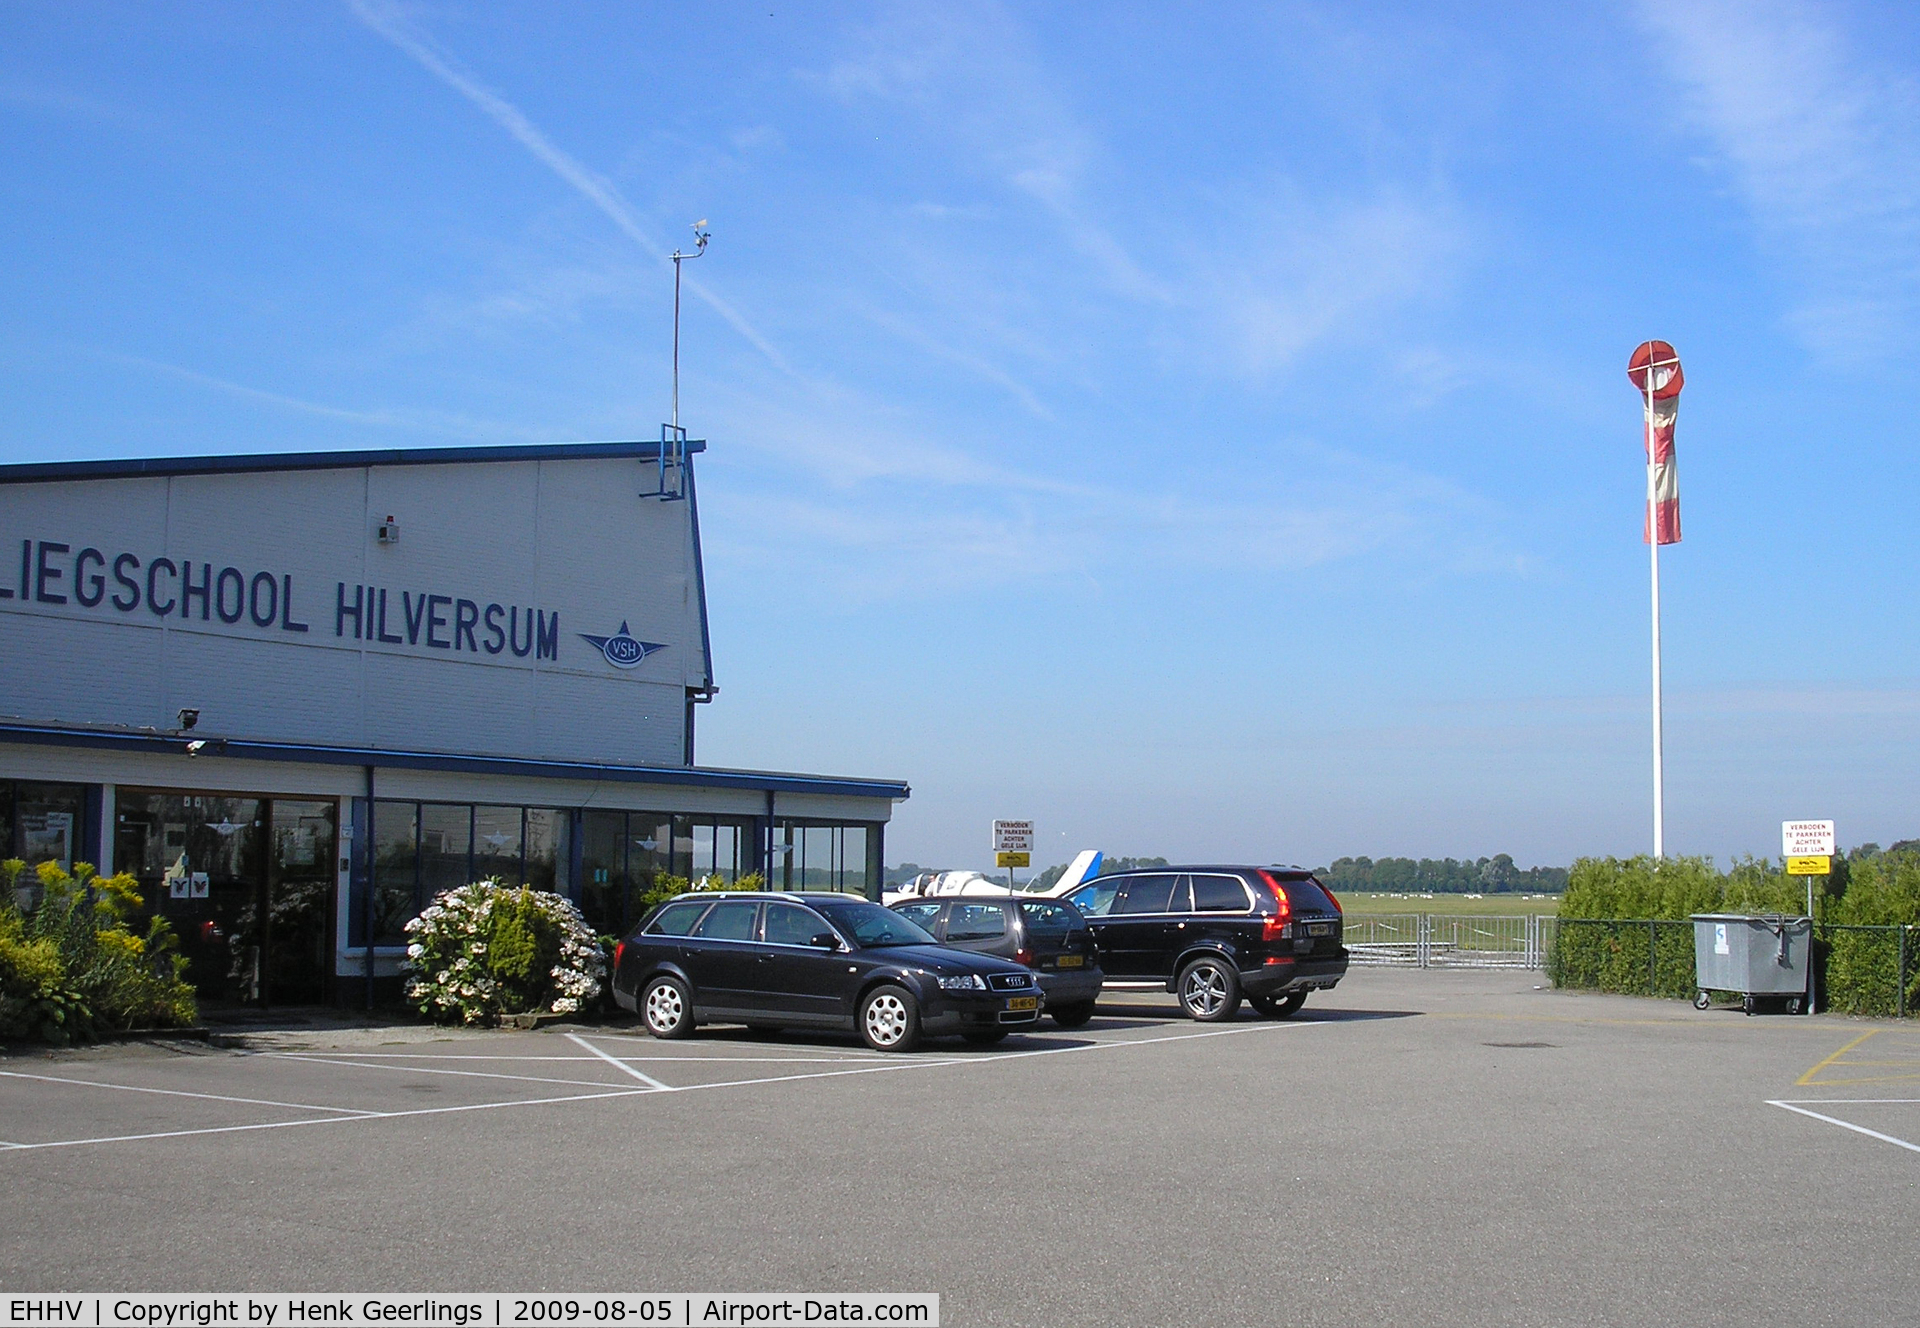 Hilversum Airport, Hilversum Netherlands (EHHV) - Hilversum Aerodrome , hangar Flying school